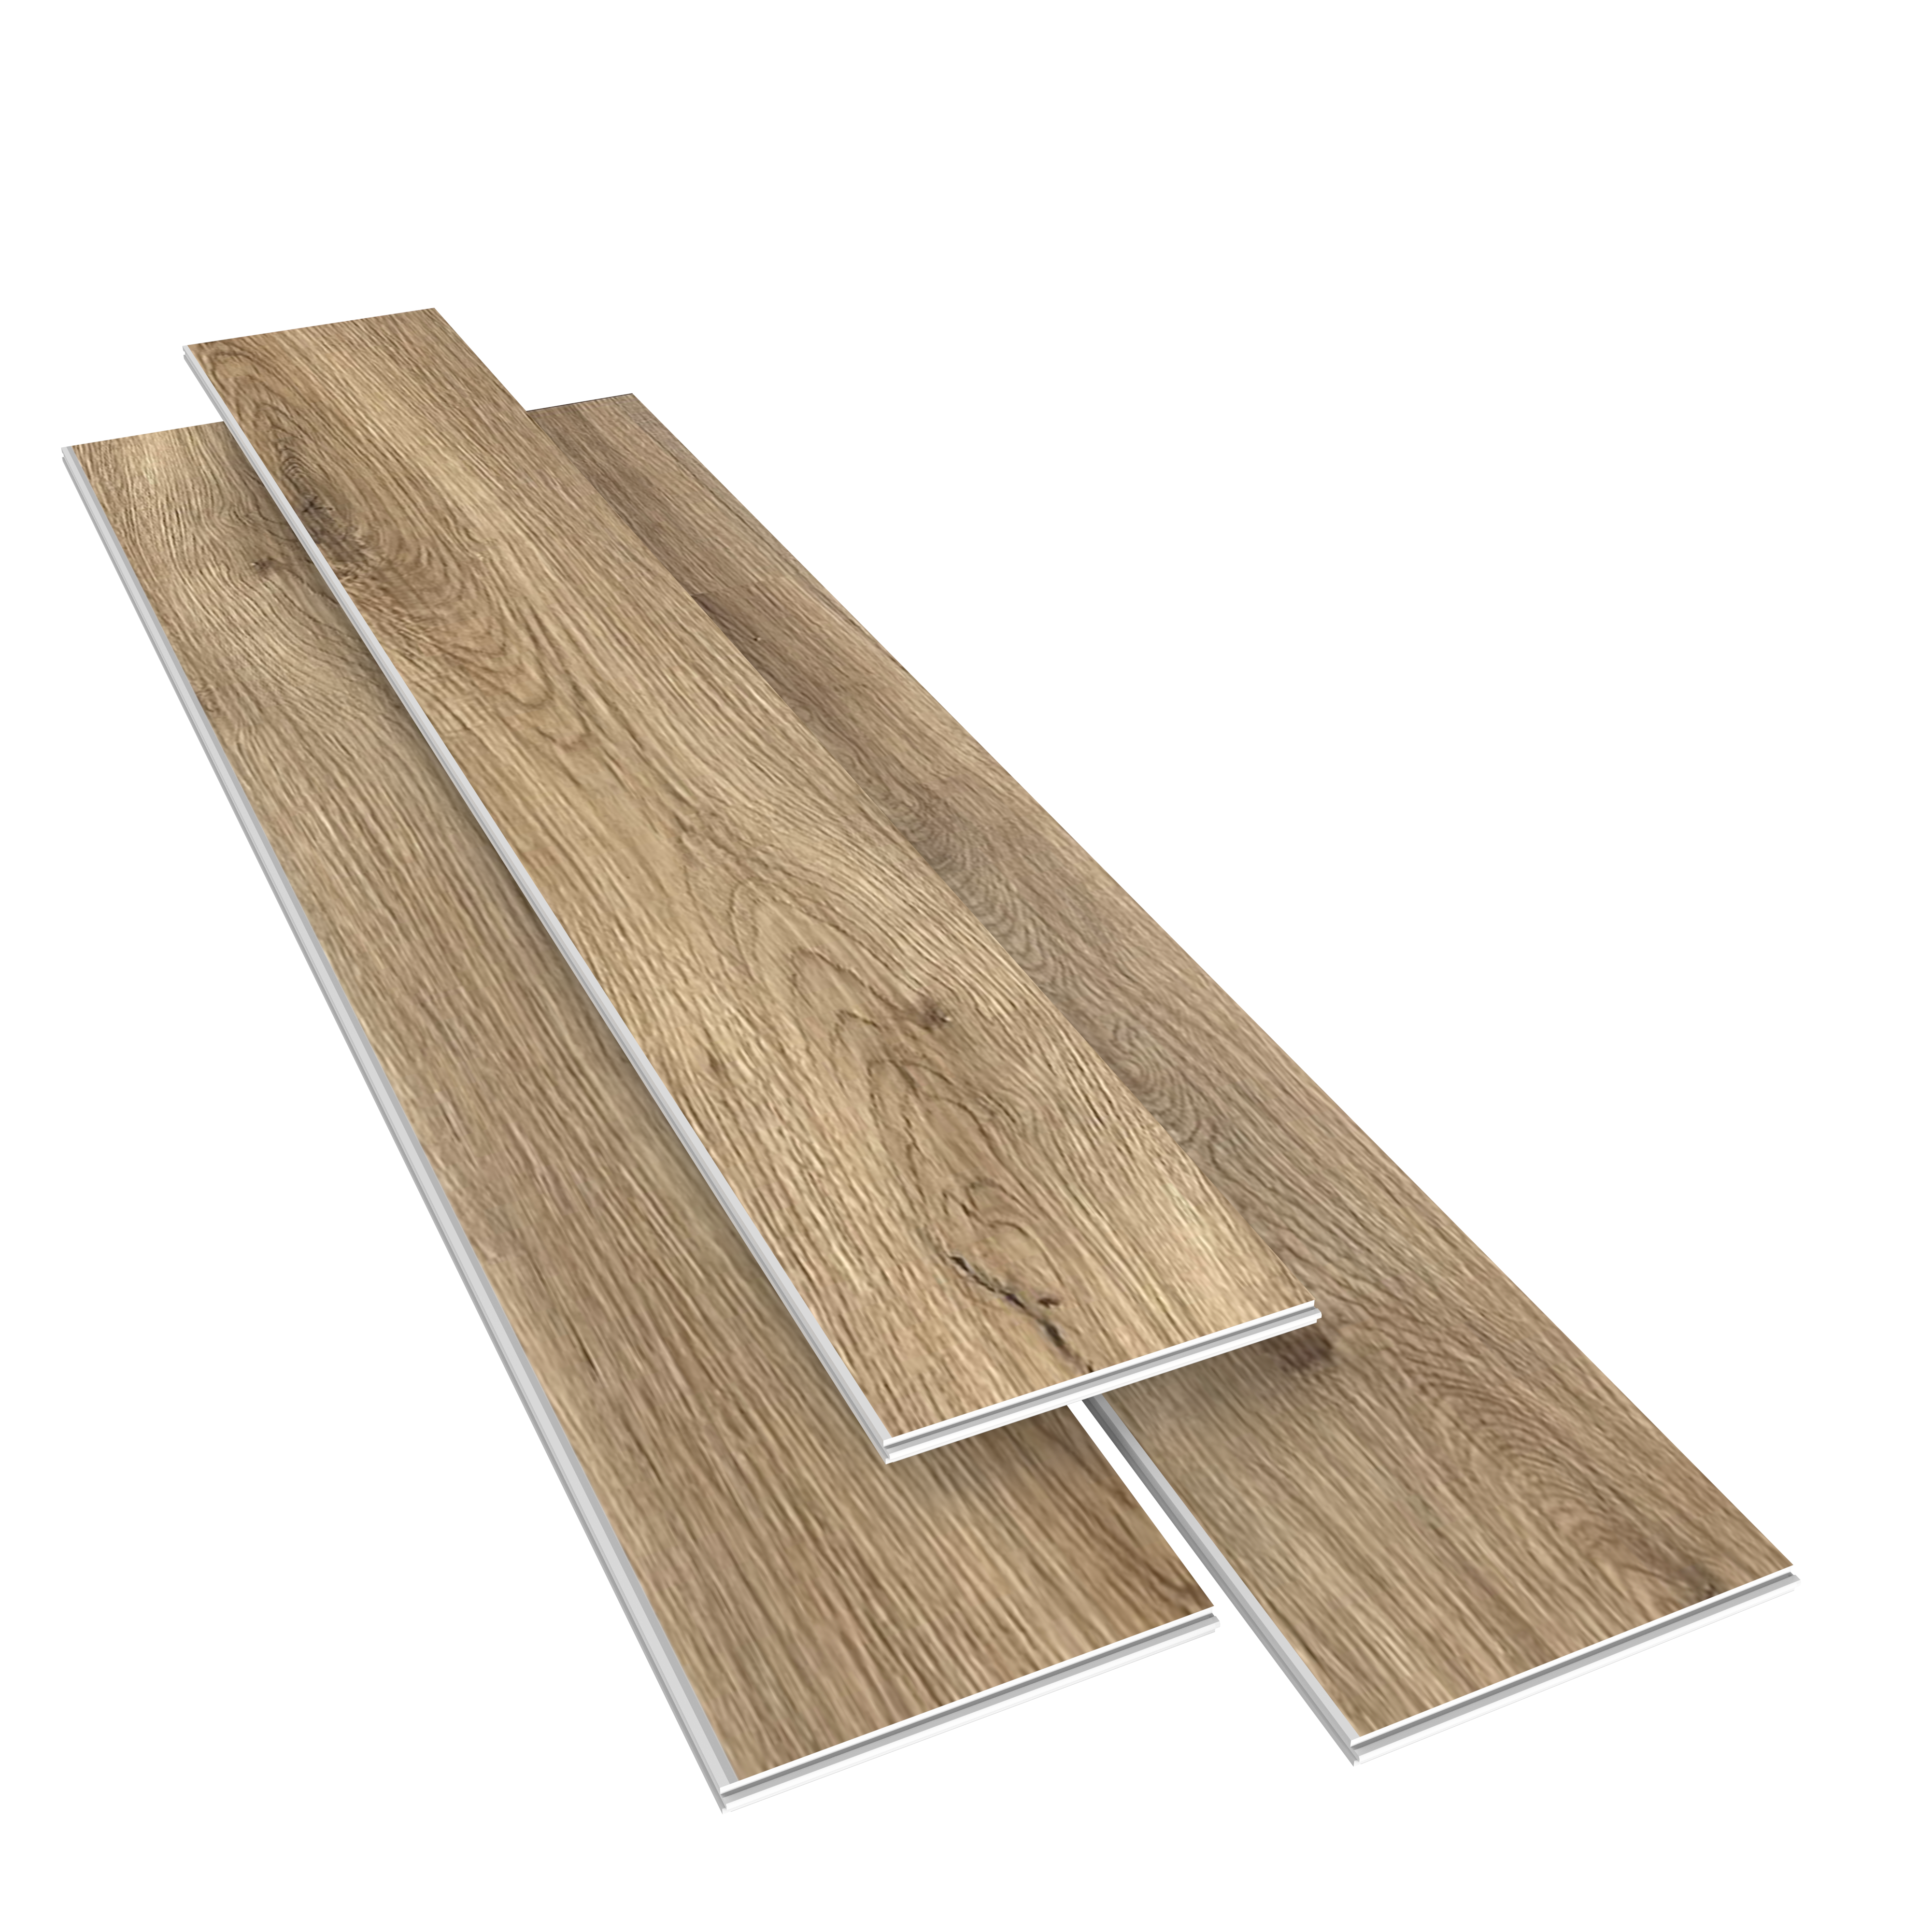 SPC Rigid Core Plank Chestnut Flooring, 7" x 48" x 6mm, 22 mil Wear Layer